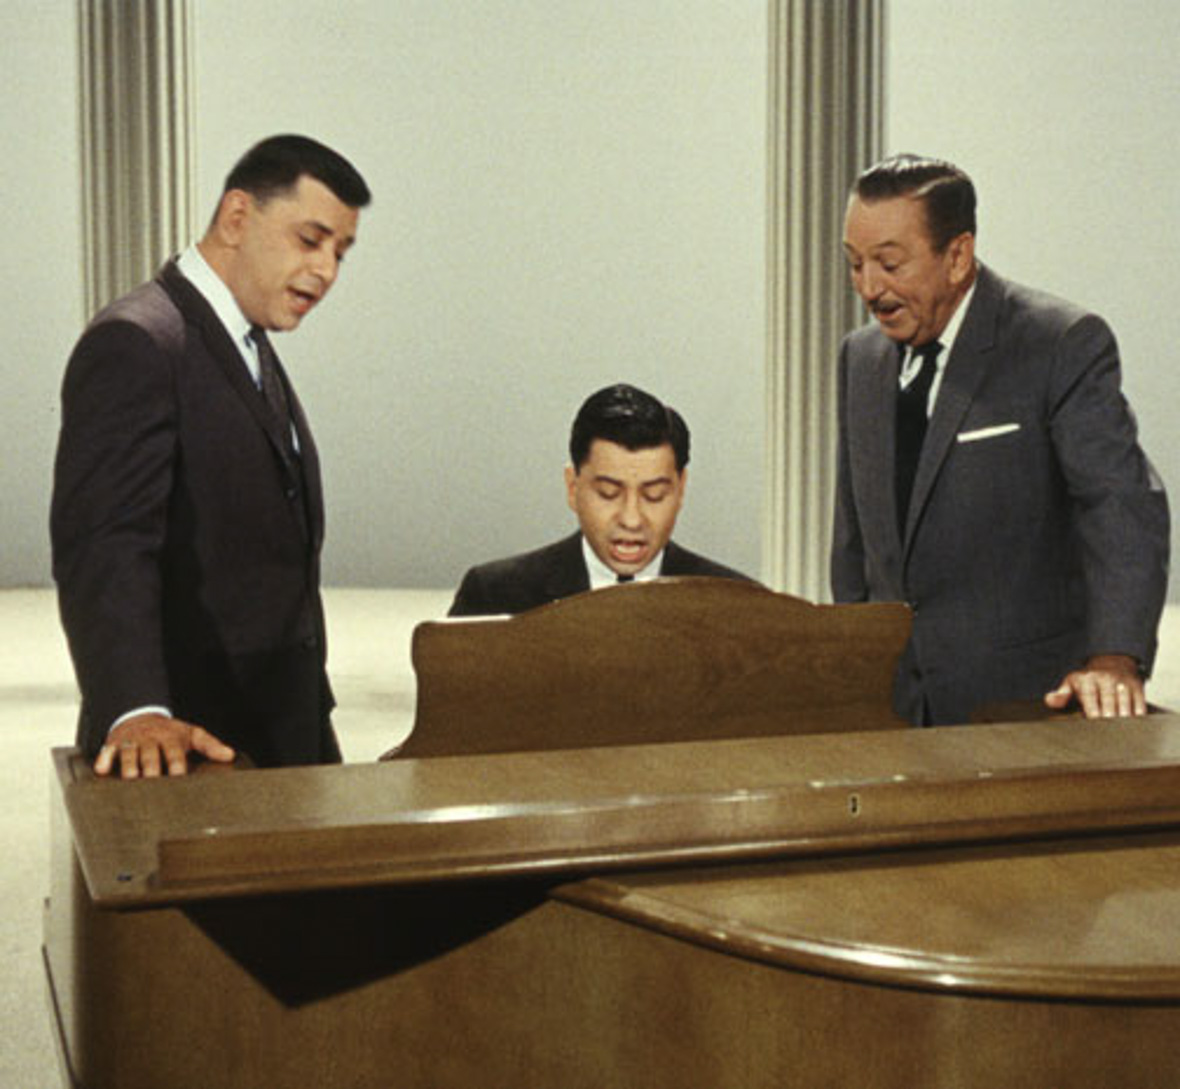 Robert B. Sherman, Richard M. Sherman, and Walt Disney sing at a piano.